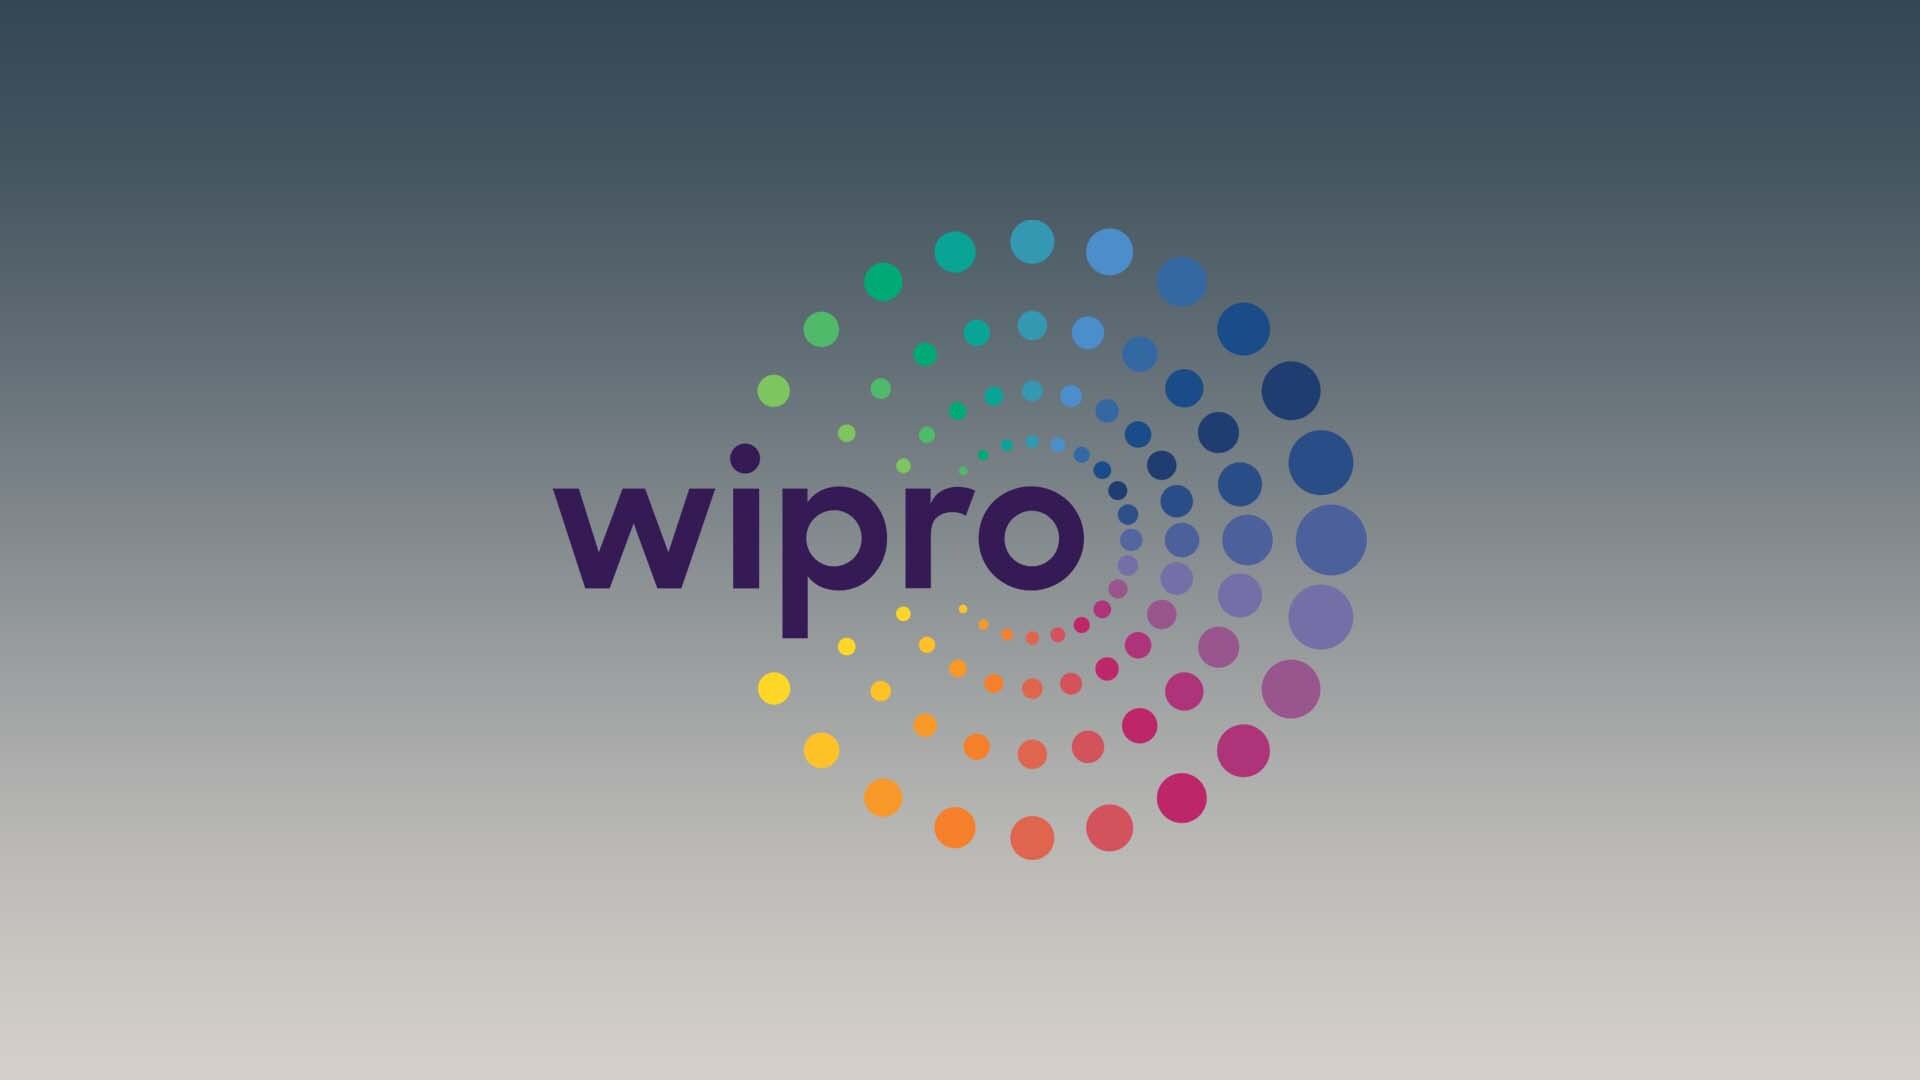 Wipro logo HD Free Vipro logo, Wipro symbol